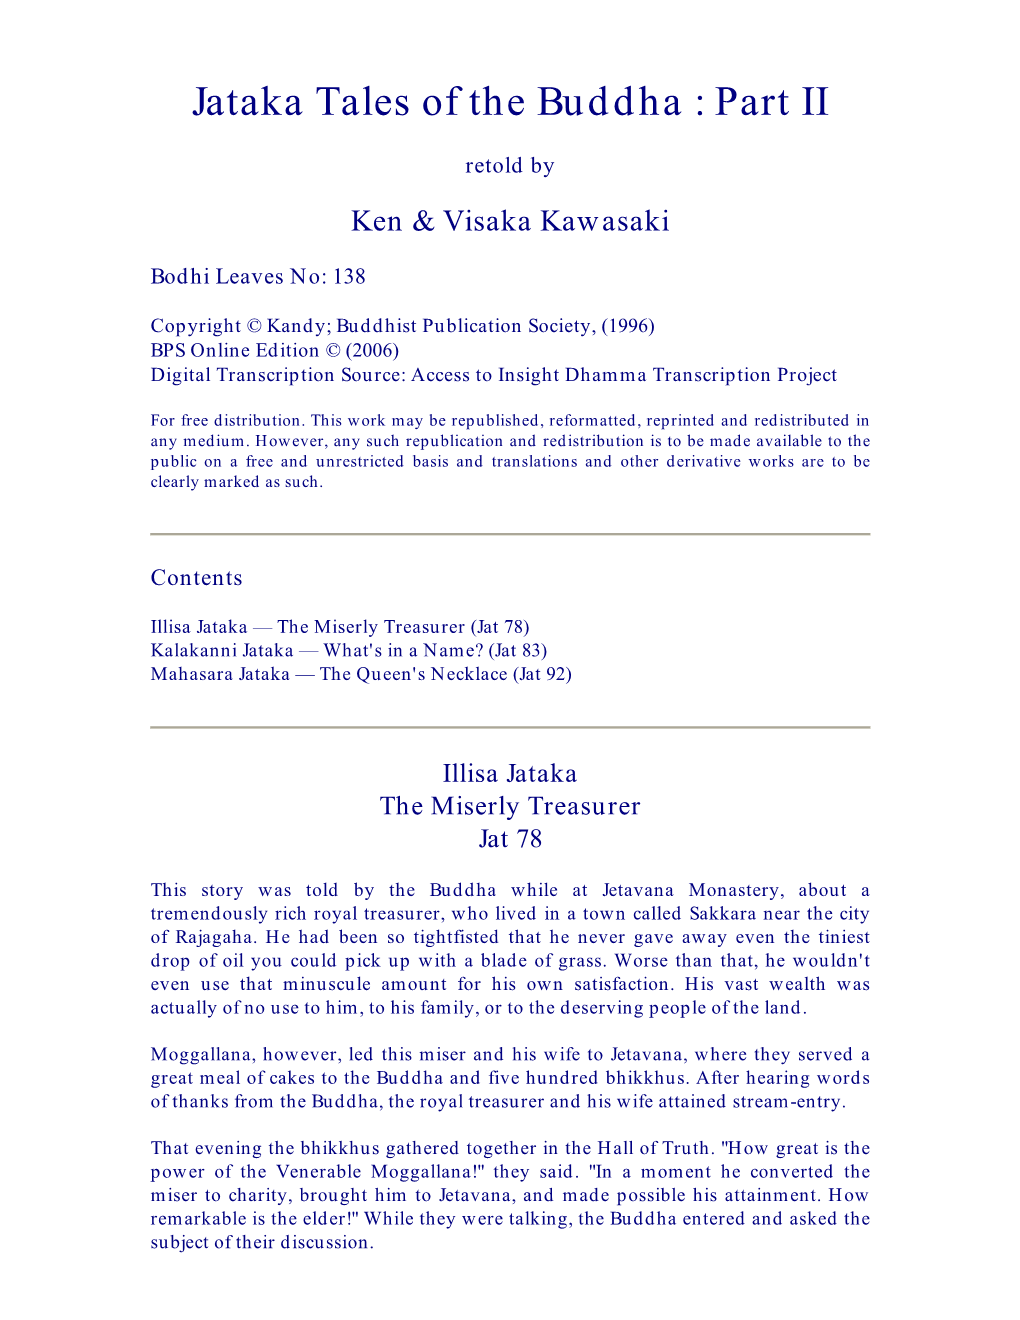 Jataka Tales of the Buddha: Part II